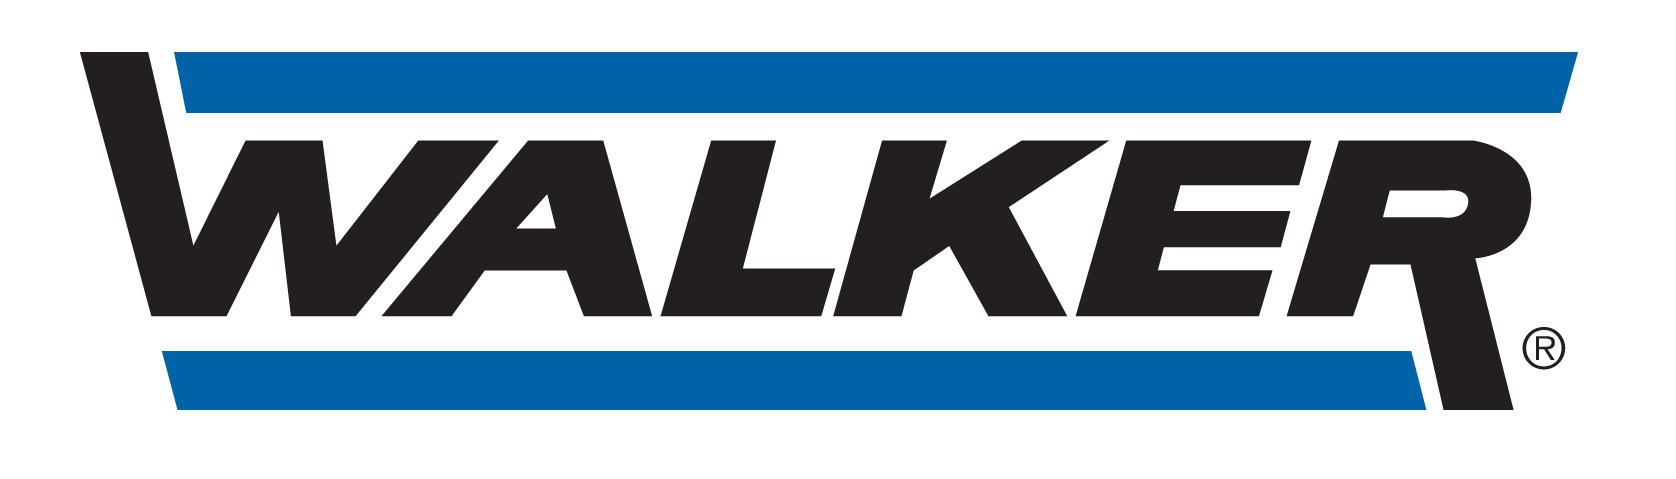 GARAGE LA BELLE EPOQUE - logo Walker